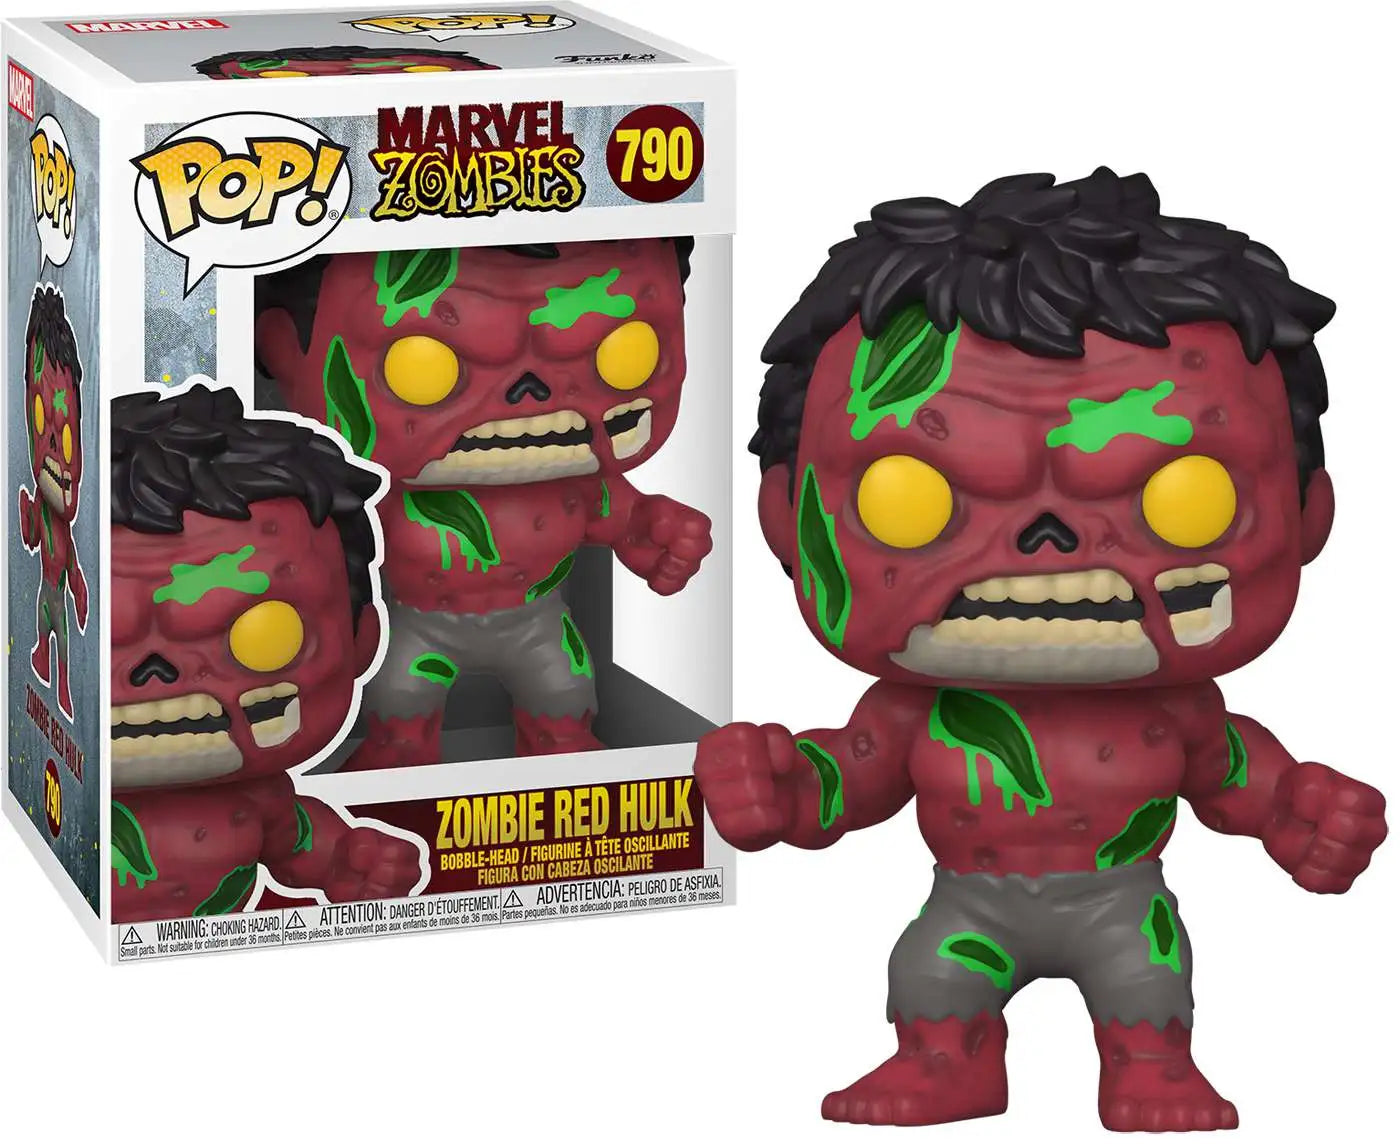 Zombie Red Hulk #790 - Marvel Zombies Vinyl Figure